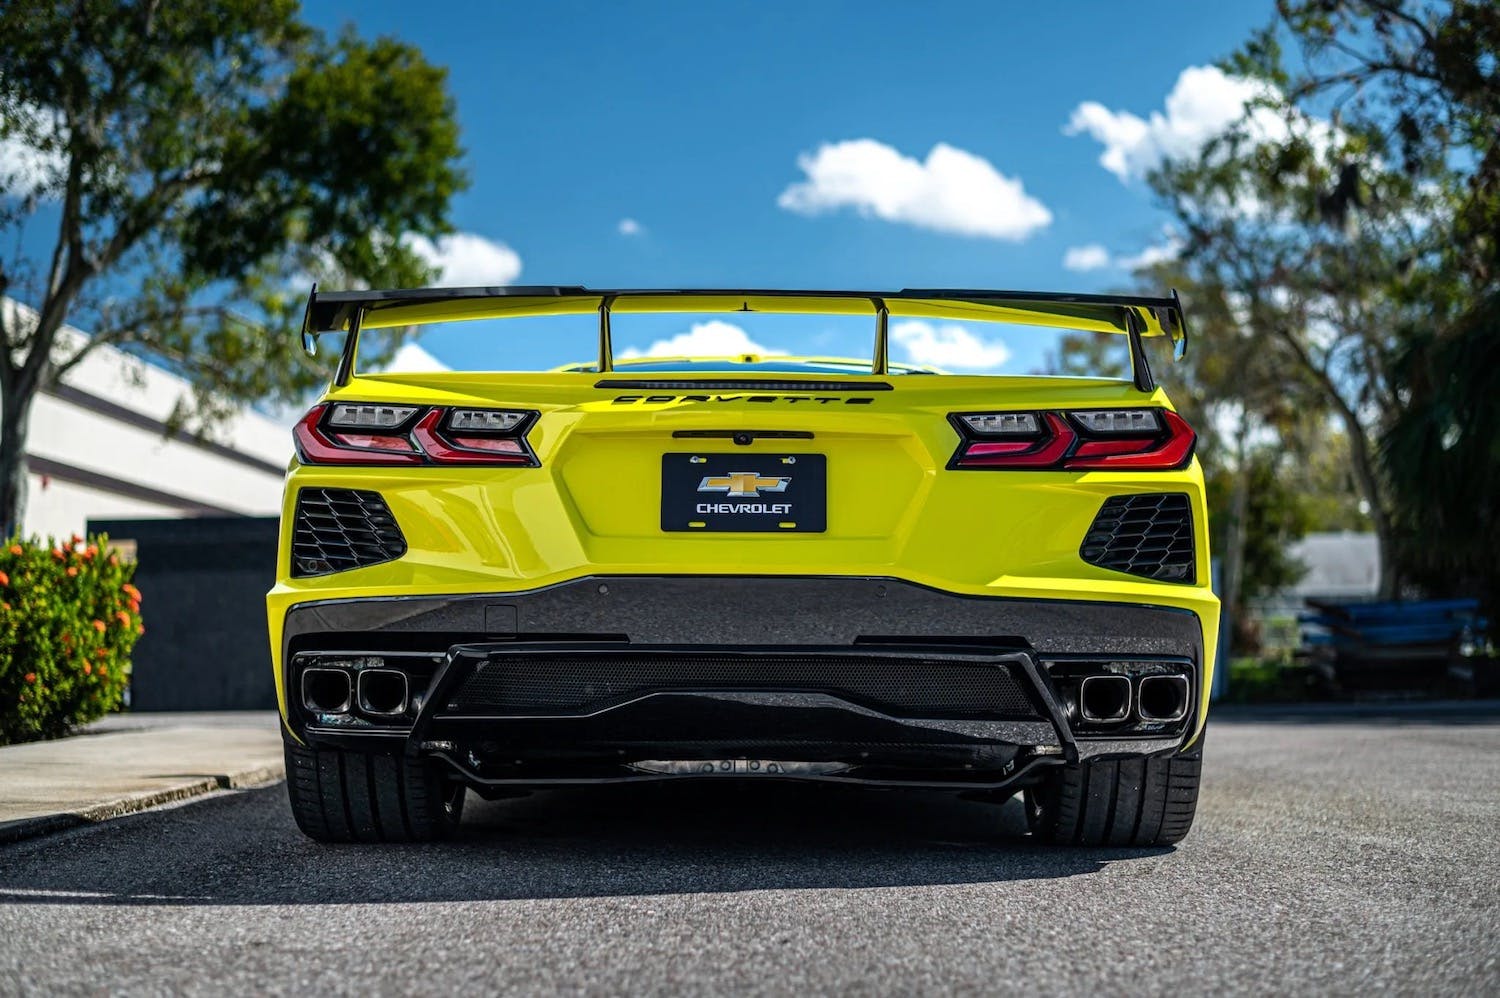 Preproduction 2022 Chevrolet Corvette Stingray rear